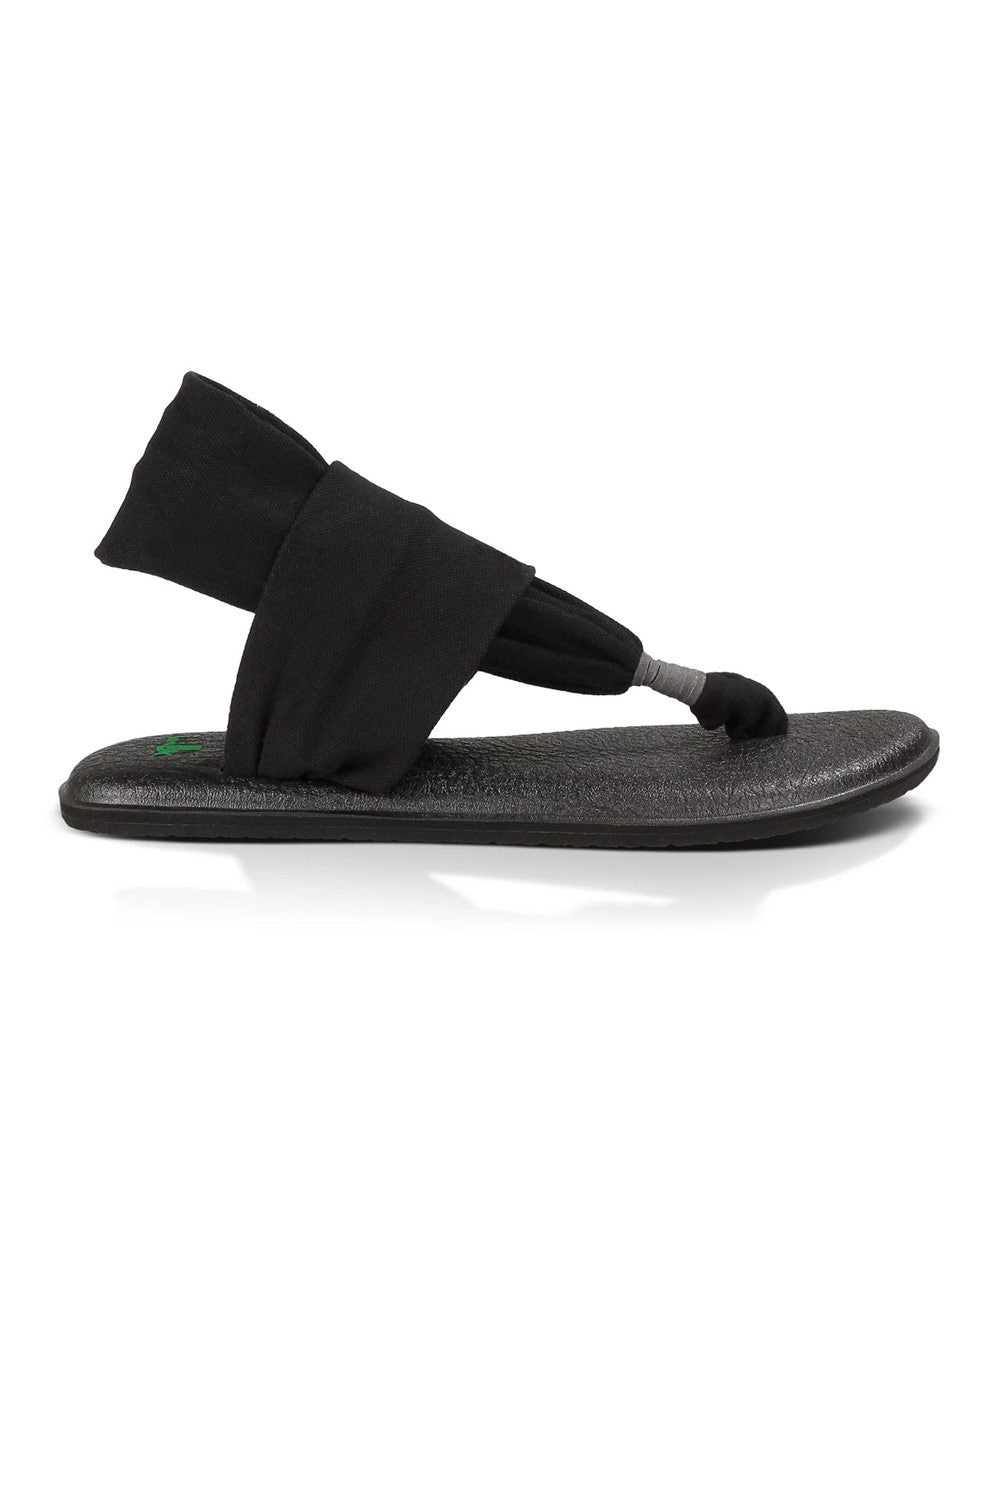 Sanuk Yoga Joy Flip Flops Womens Sandals Size 7 Shoes Black White